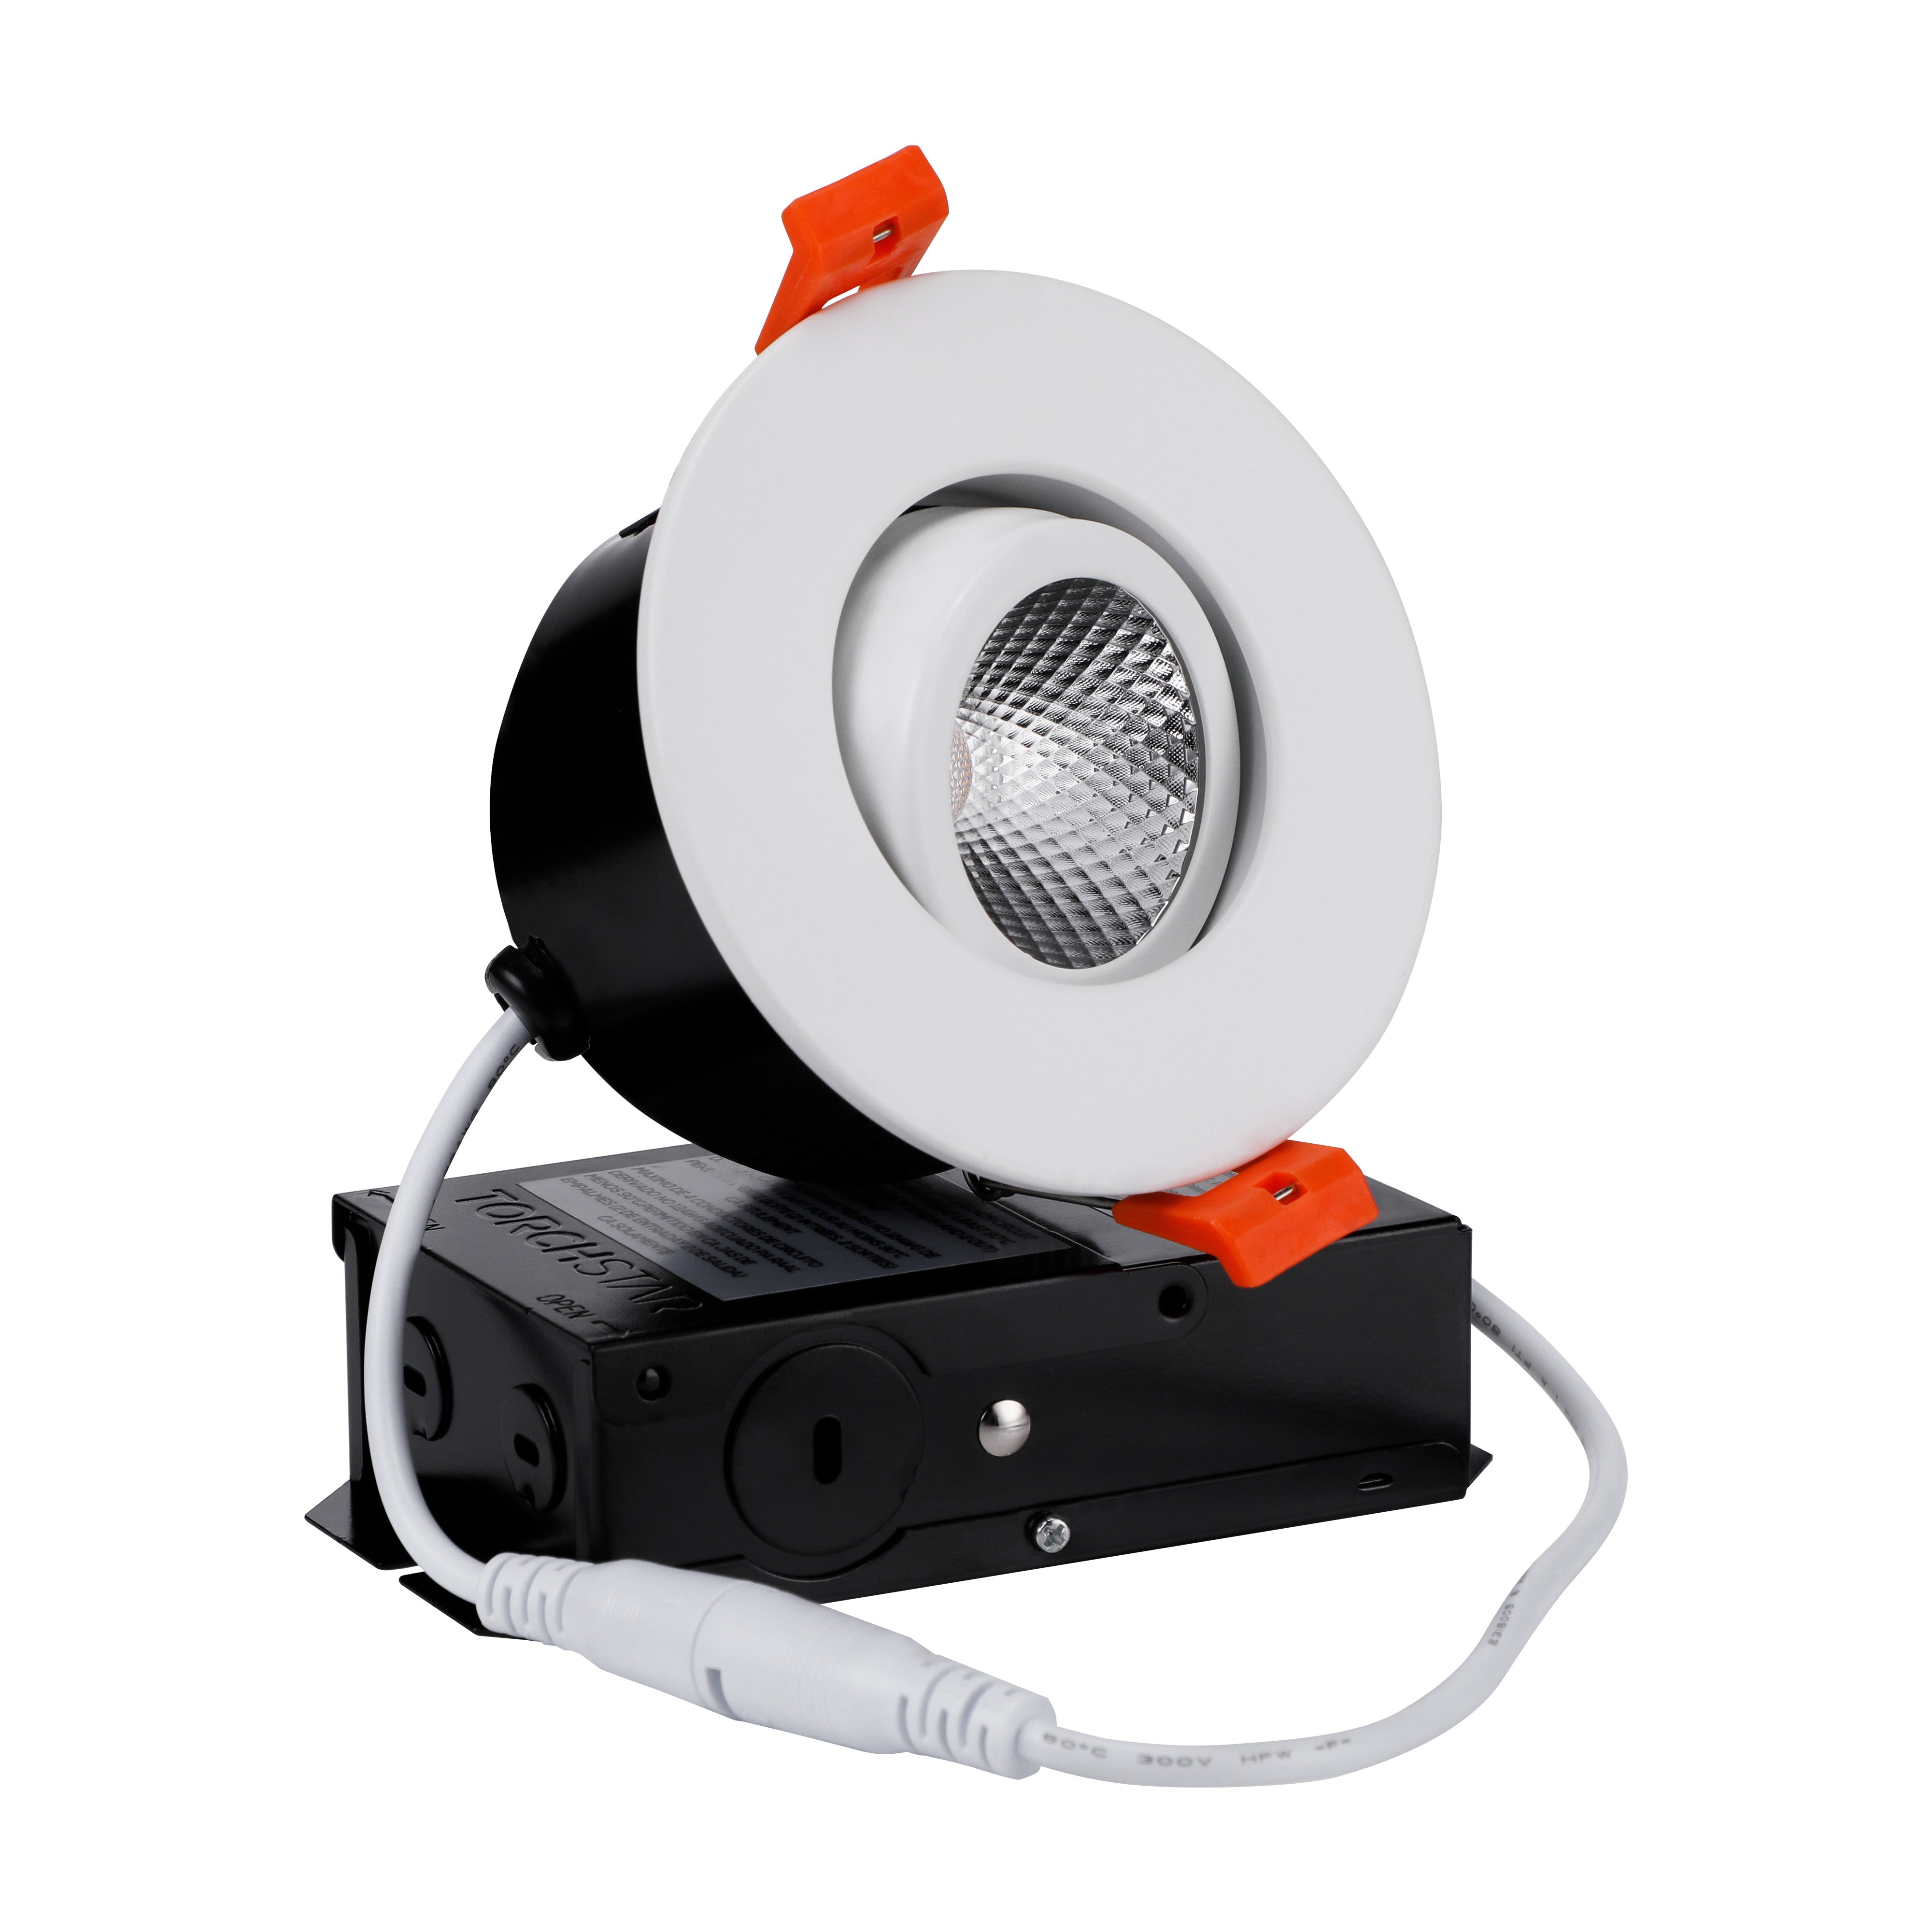 Circulex 3" Gimbal LED Recessed Light - White - 7W - Single CCT